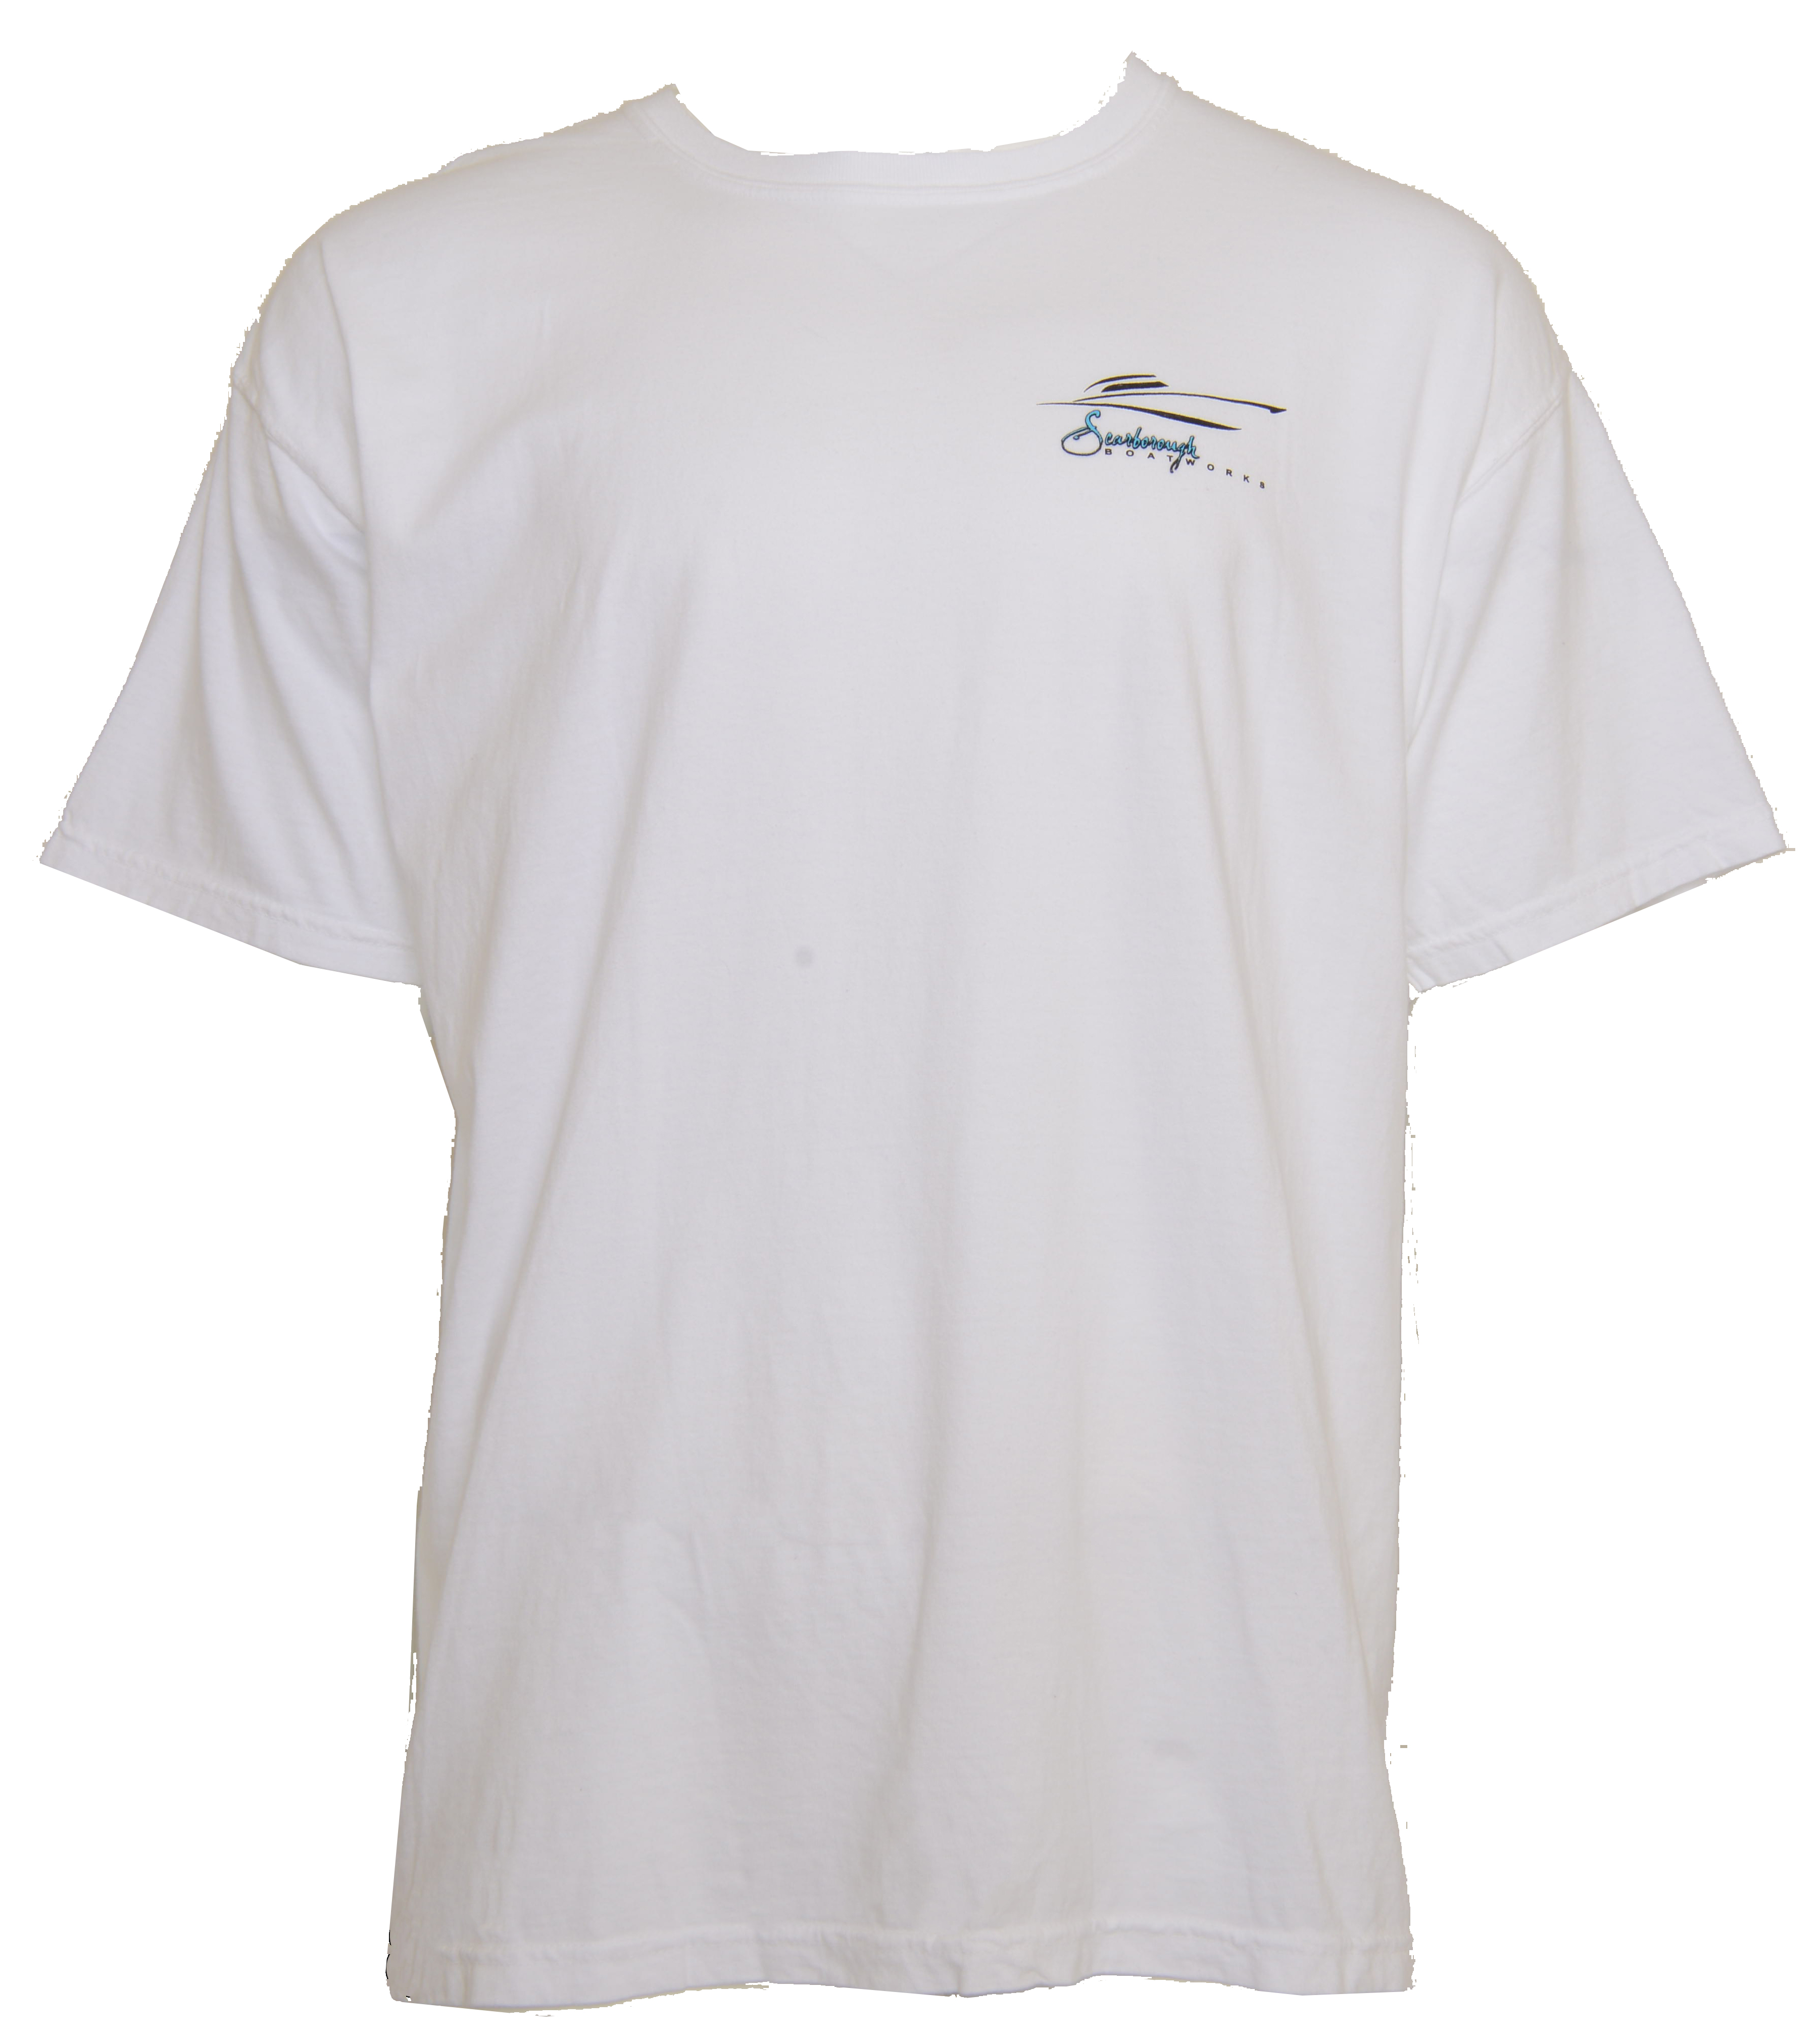 Scarborough Boatworks Short Sleeve T-shirt - White